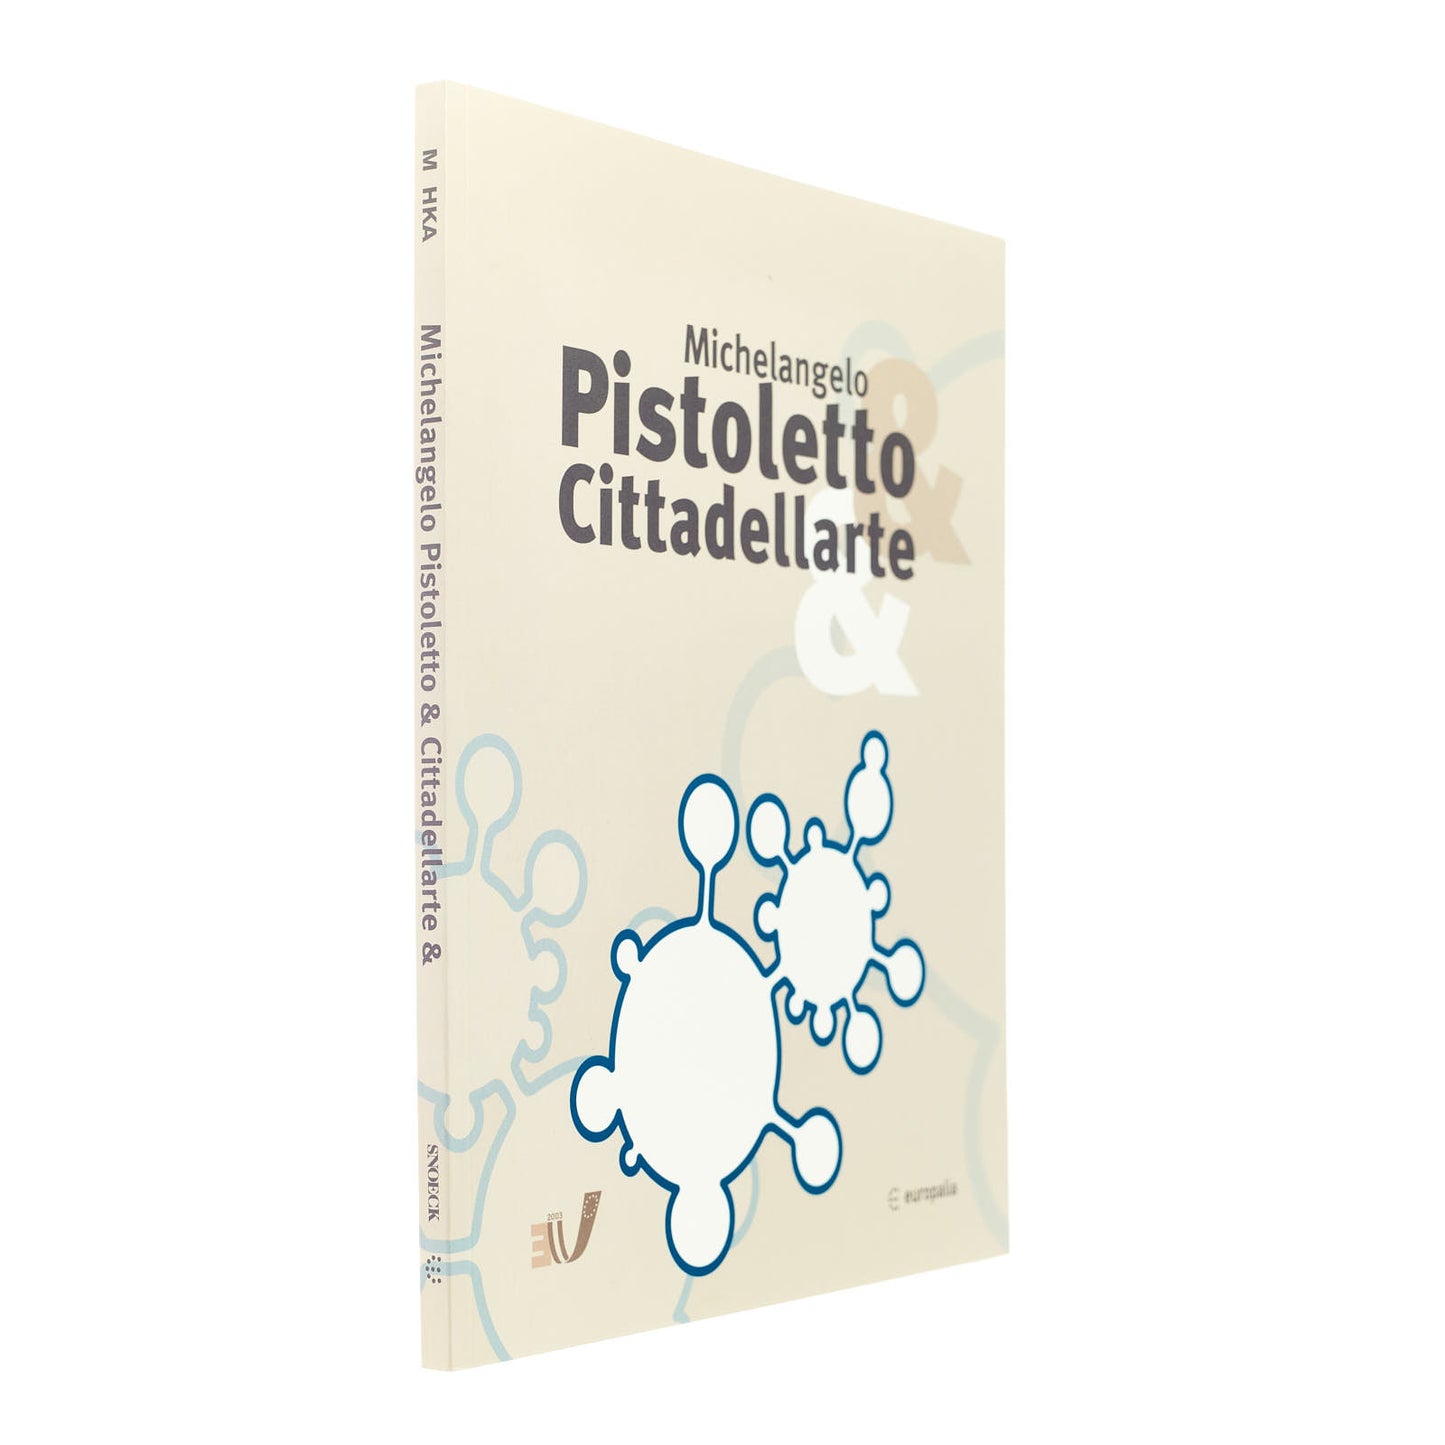 Michelangelo Pistoletto e Cittadellarte (exhbition catalogue)